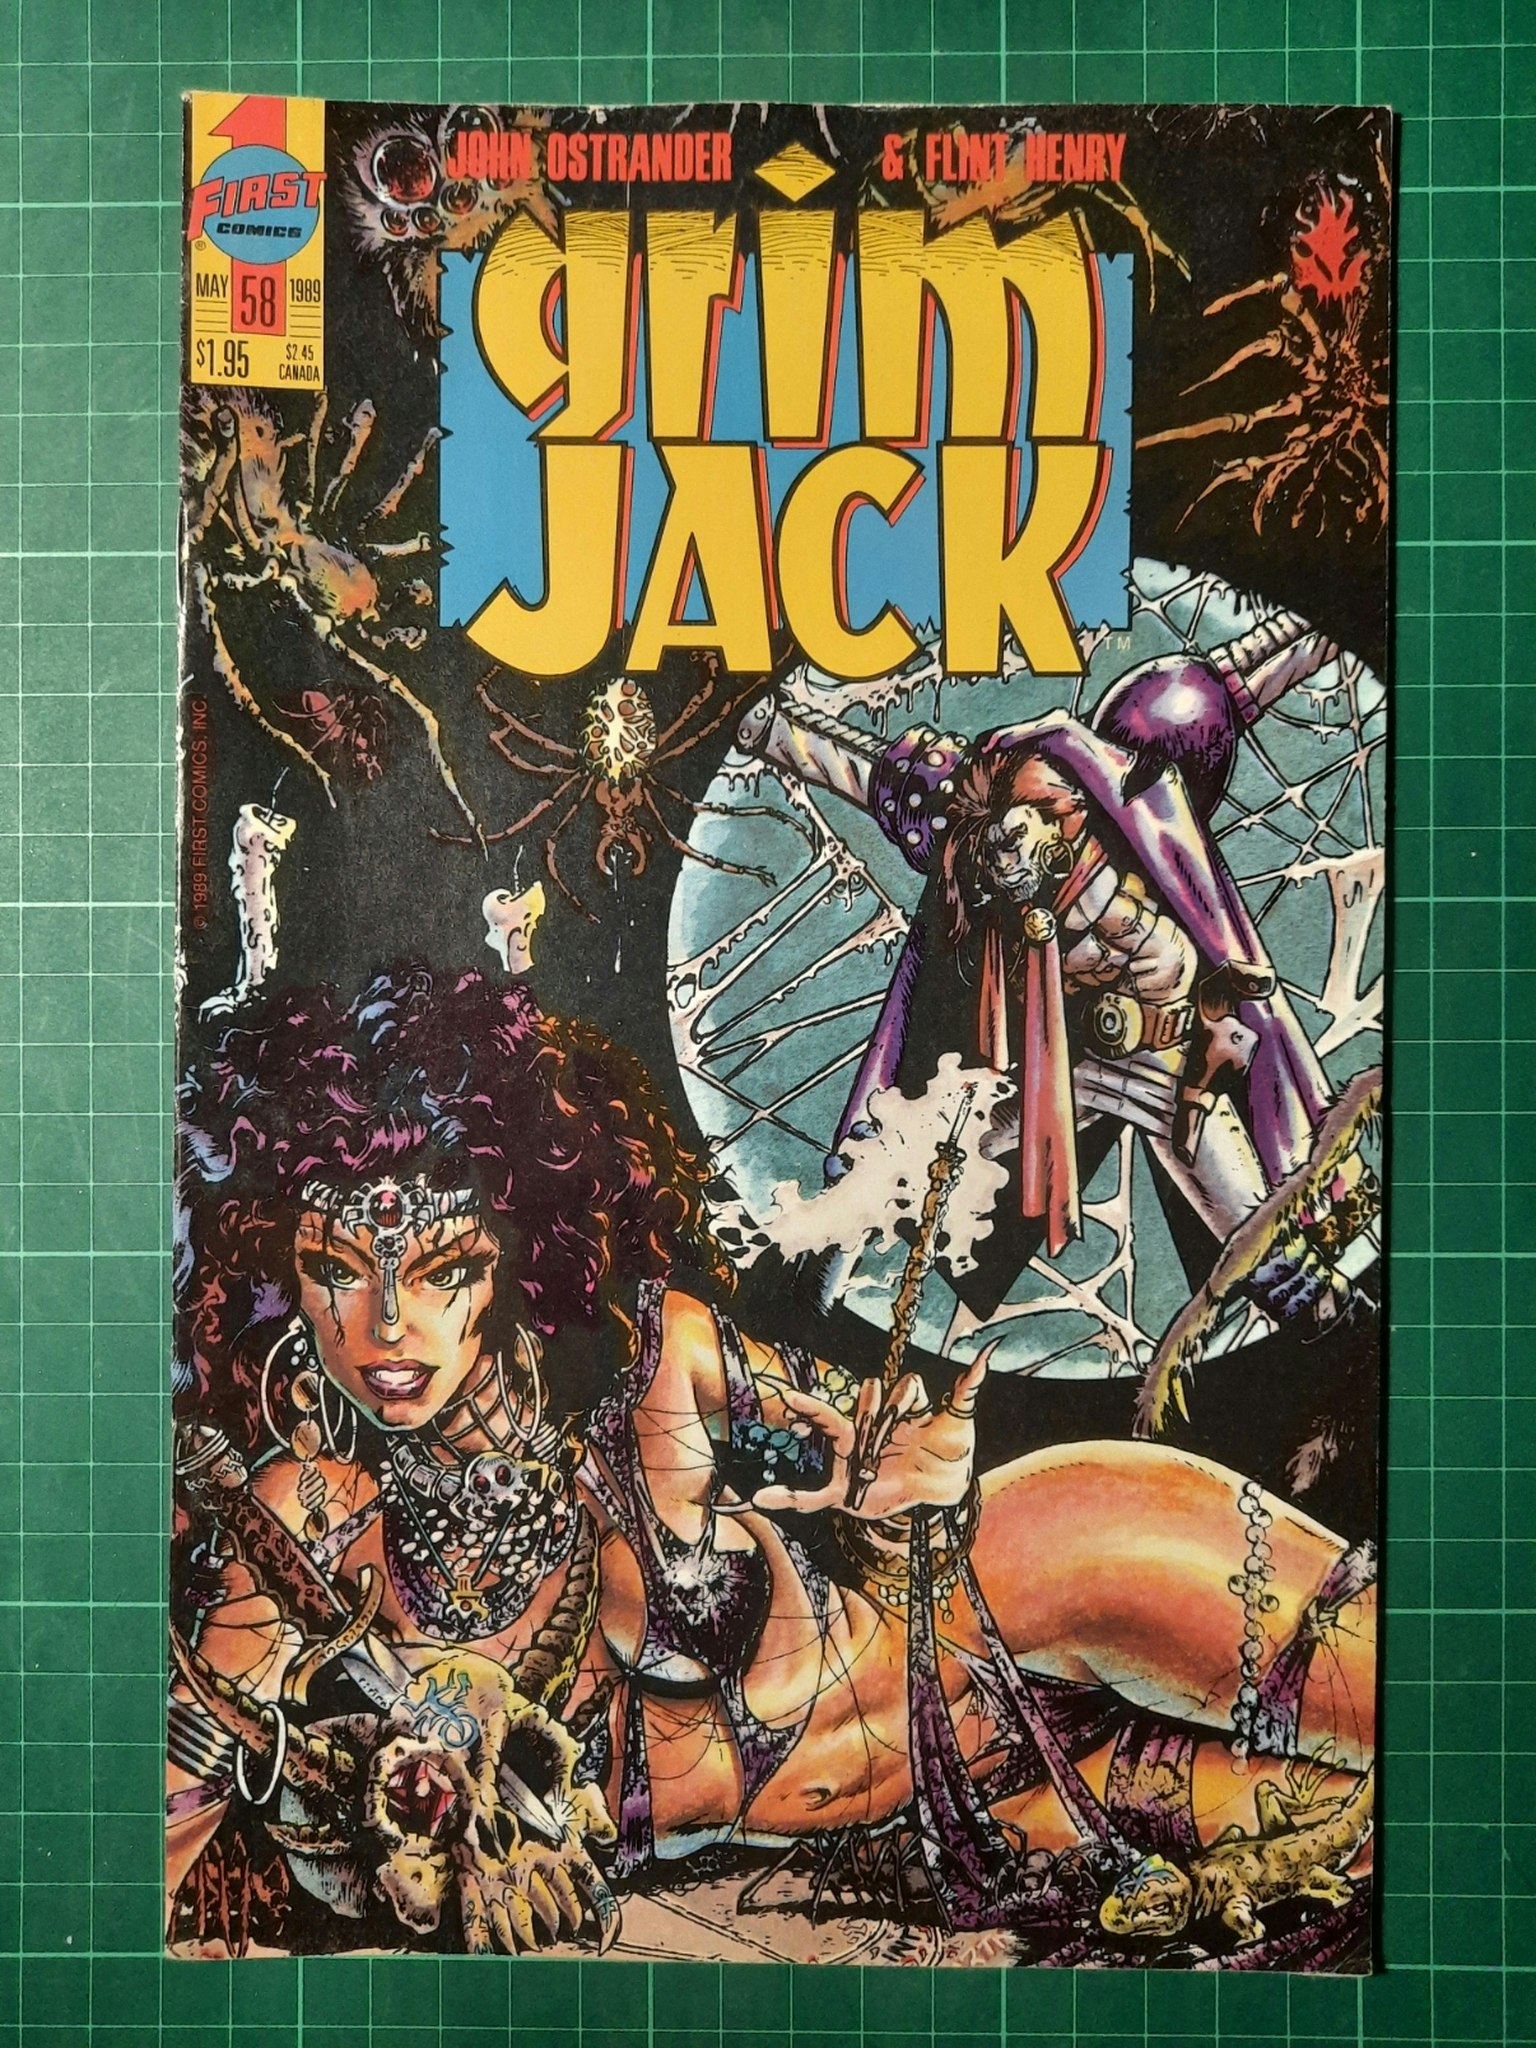 Grim Jack #58